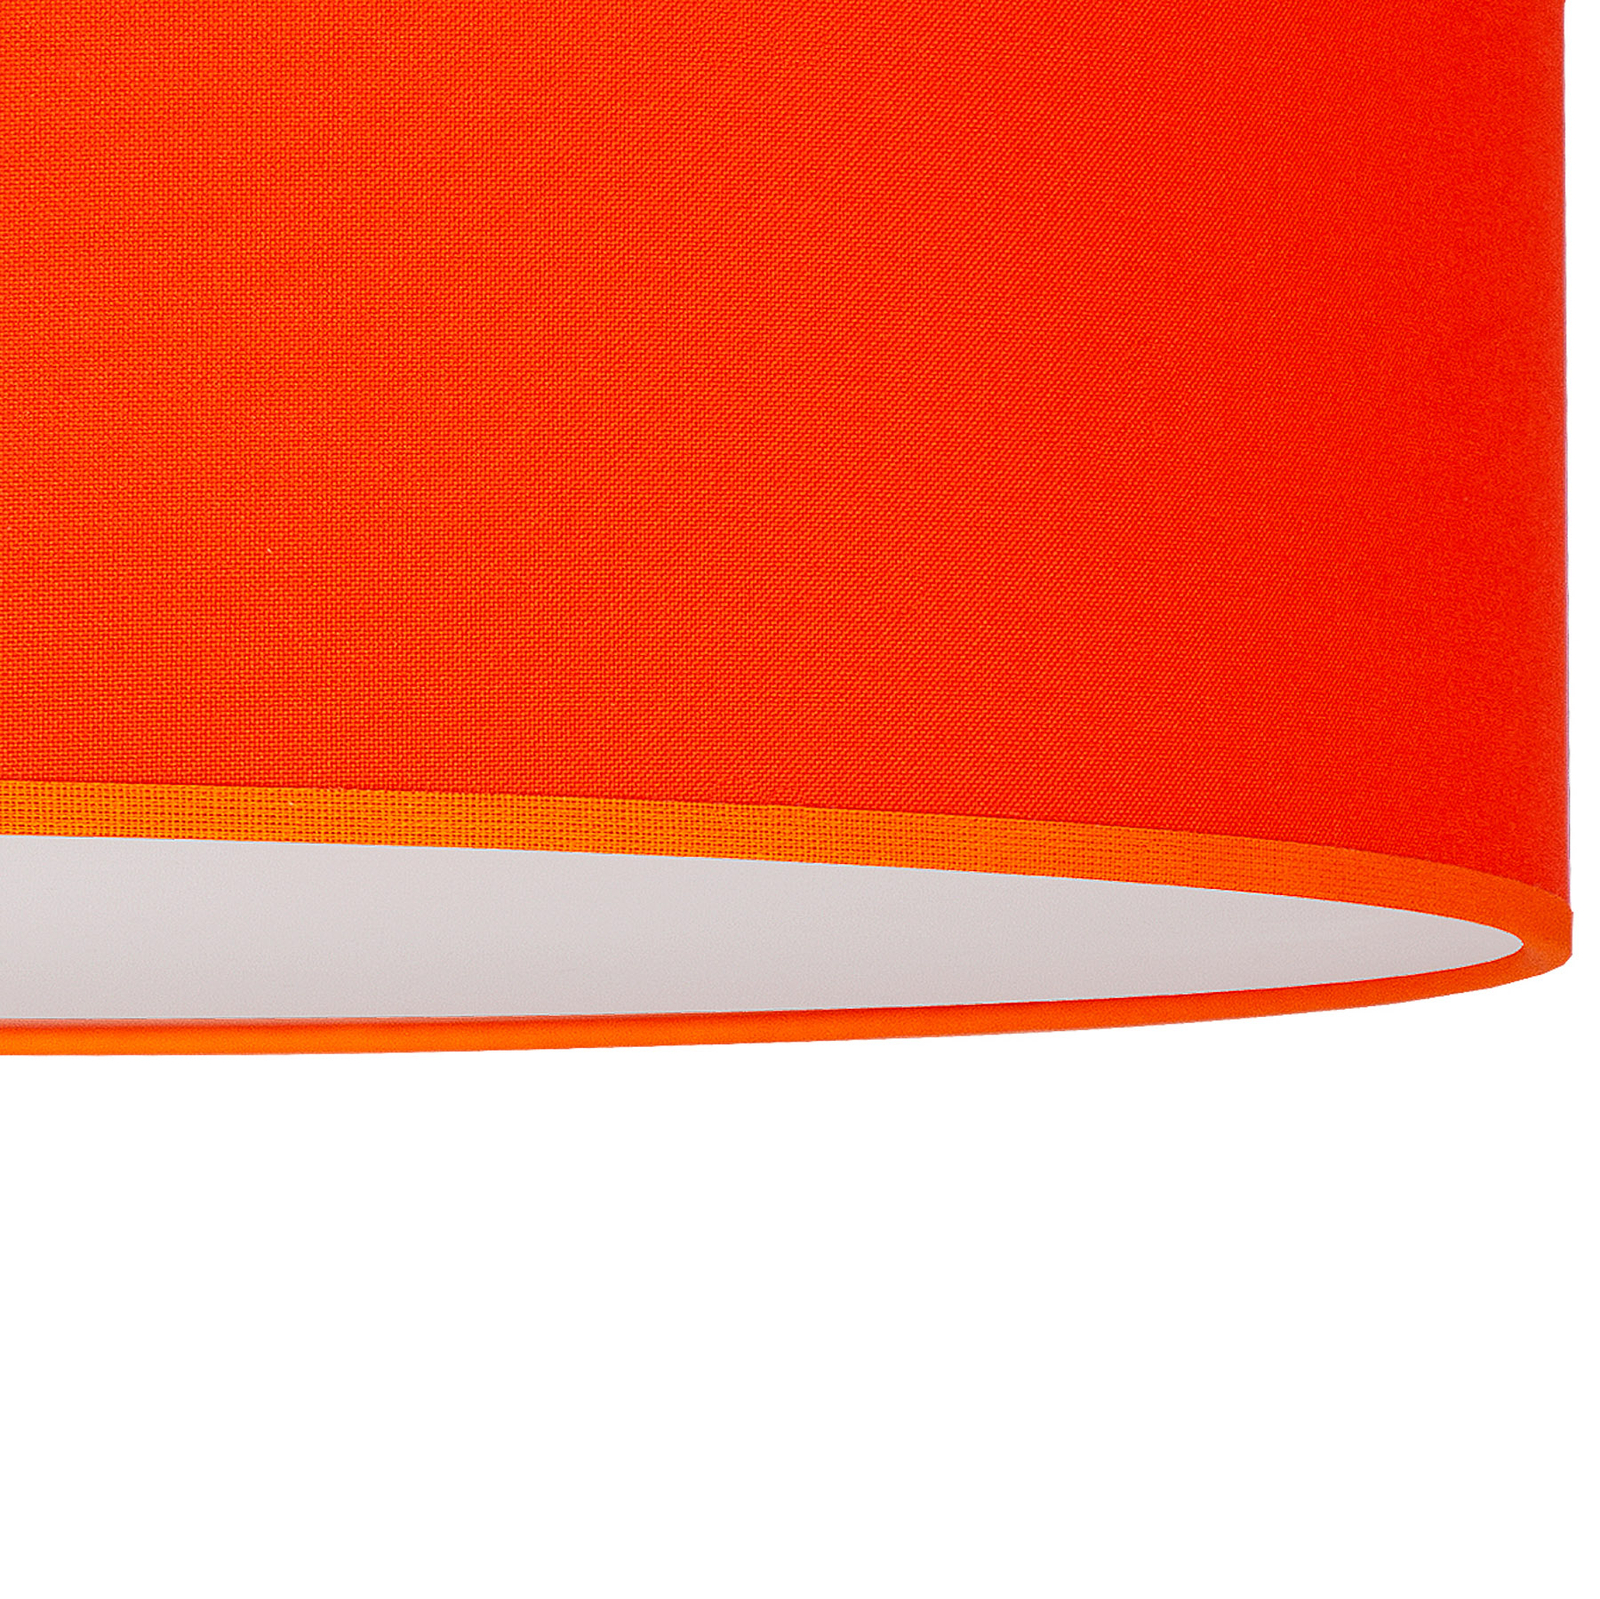 Euluna Roller, cor de laranja, Ø 40 cm